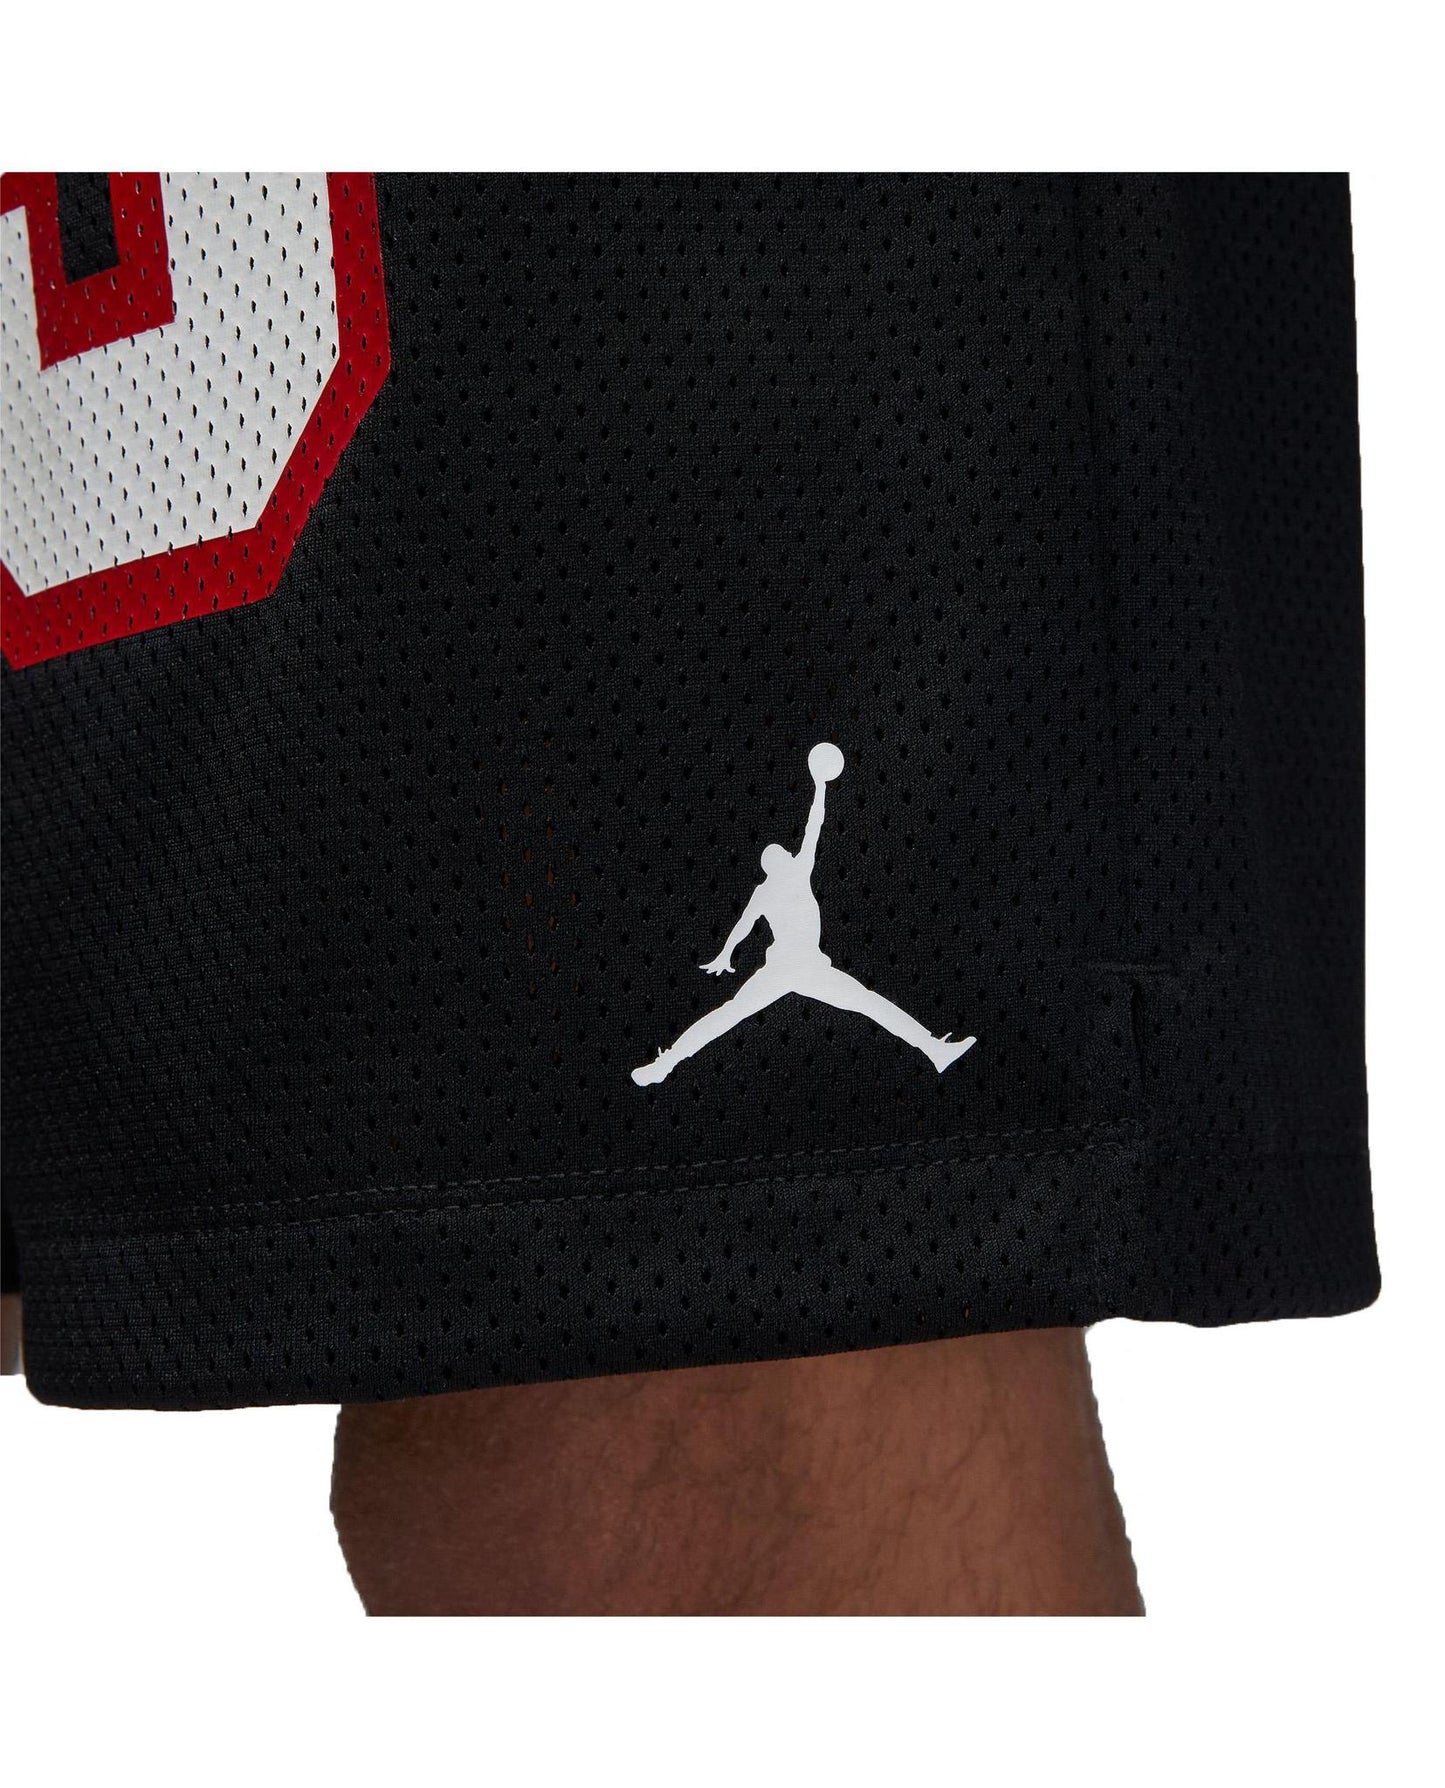 Air Jordan Essentials Graphic Mesh Shorts 23 Premium Basketball Short Size  S-XXL